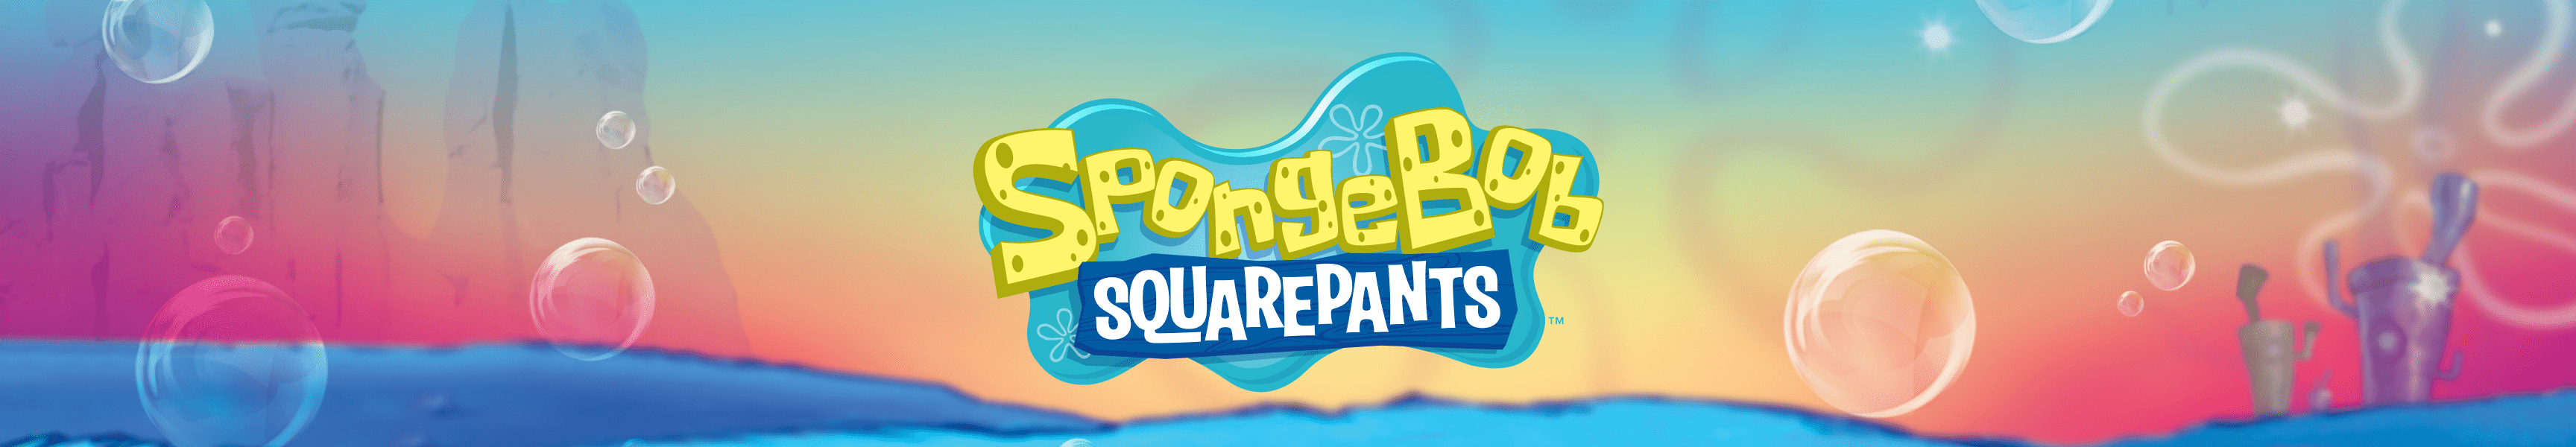 SpongeBob SquarePants Gifts Under $50